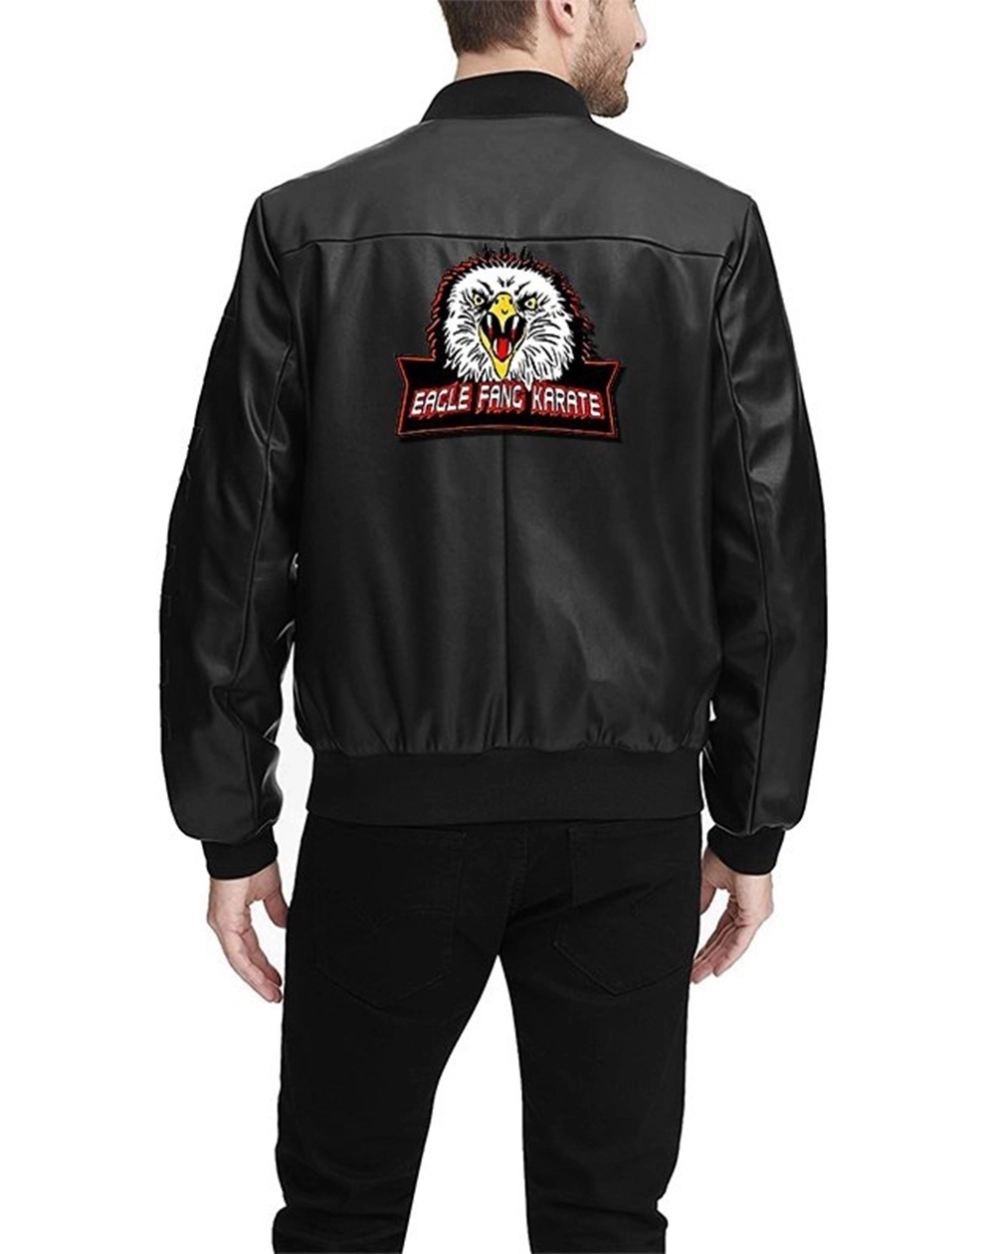 Cobra Kai Eagle Fang Karate Leather Jacket